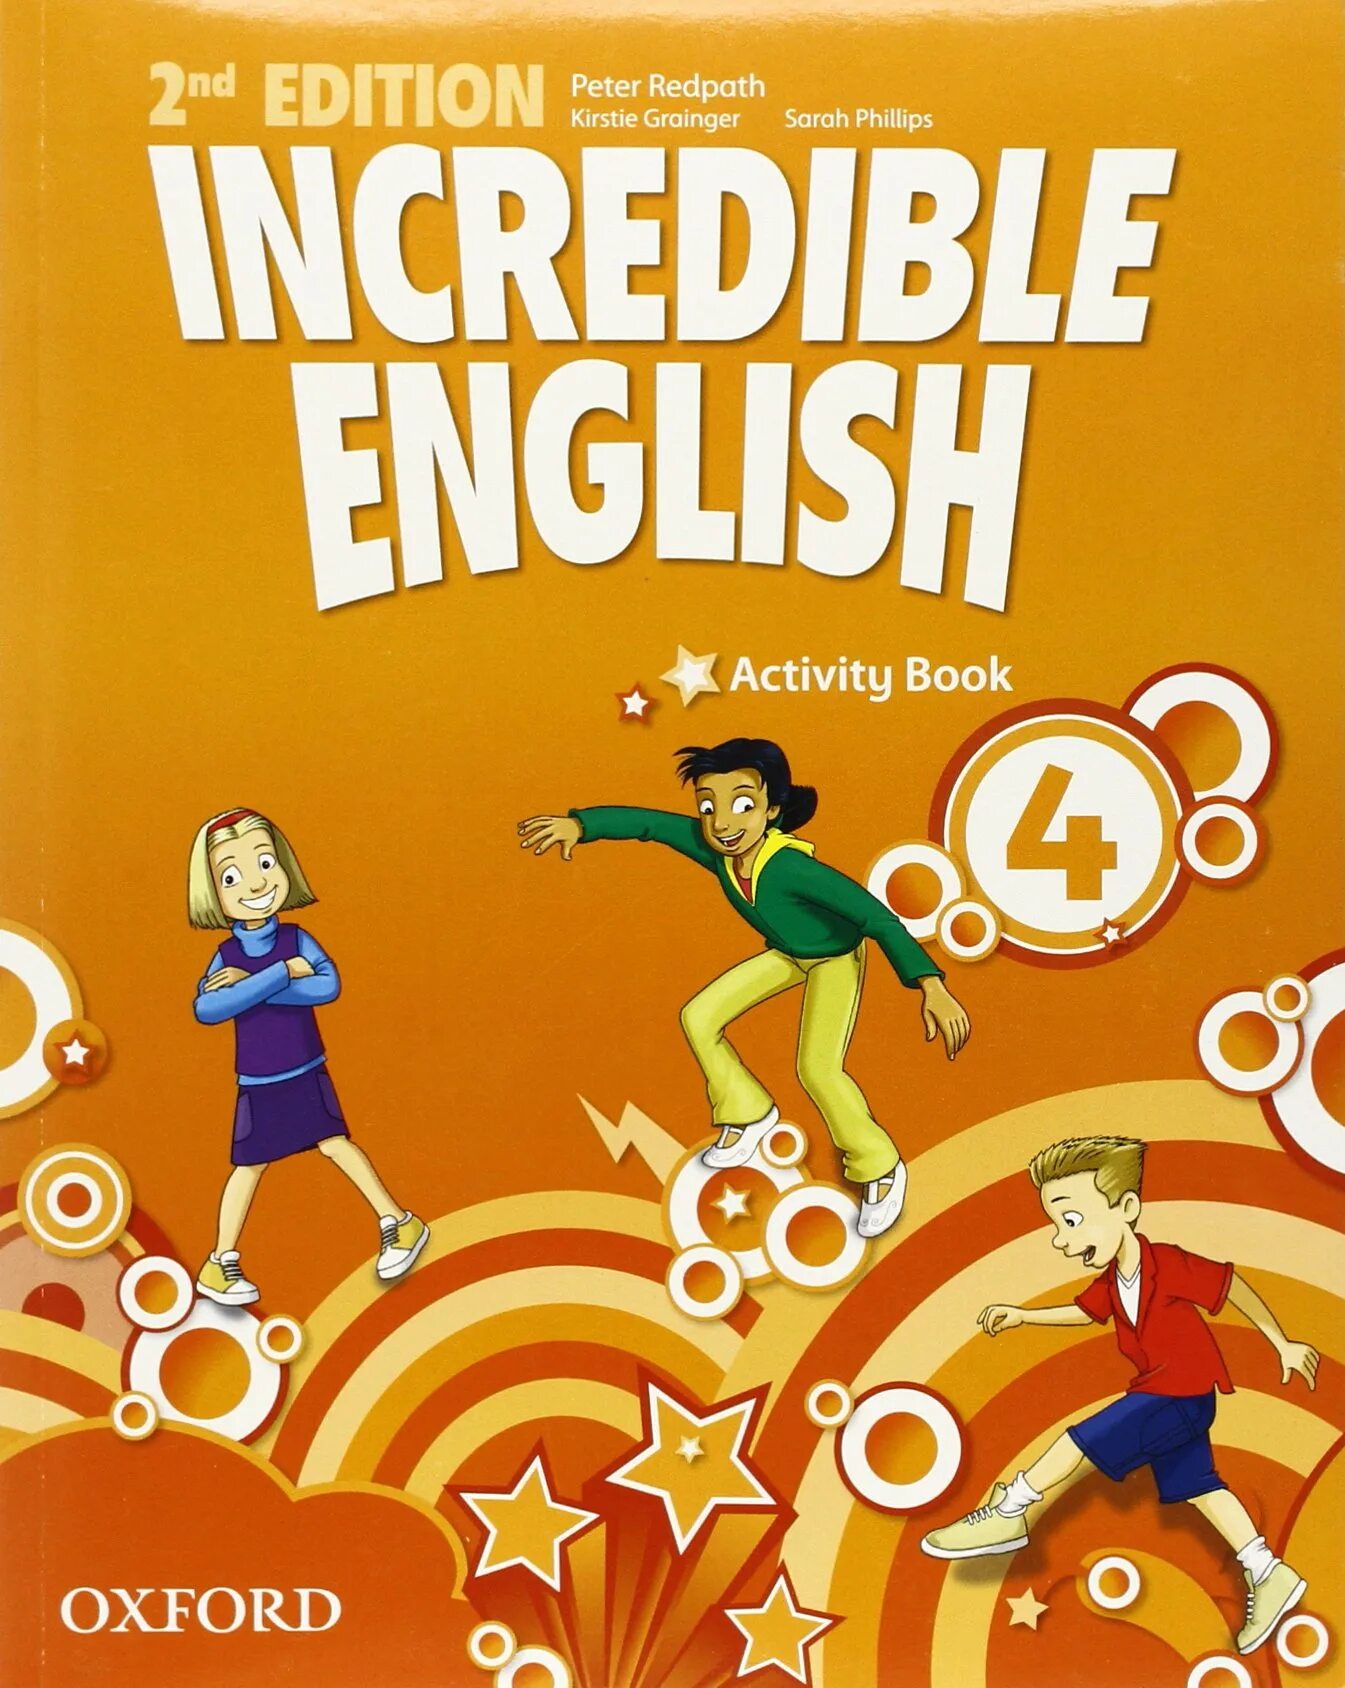 English 4 practice. Incredible English 2 2nd Edition activity book. Инкредибл Инглиш. Incredible English activity book. Incredible English 4.